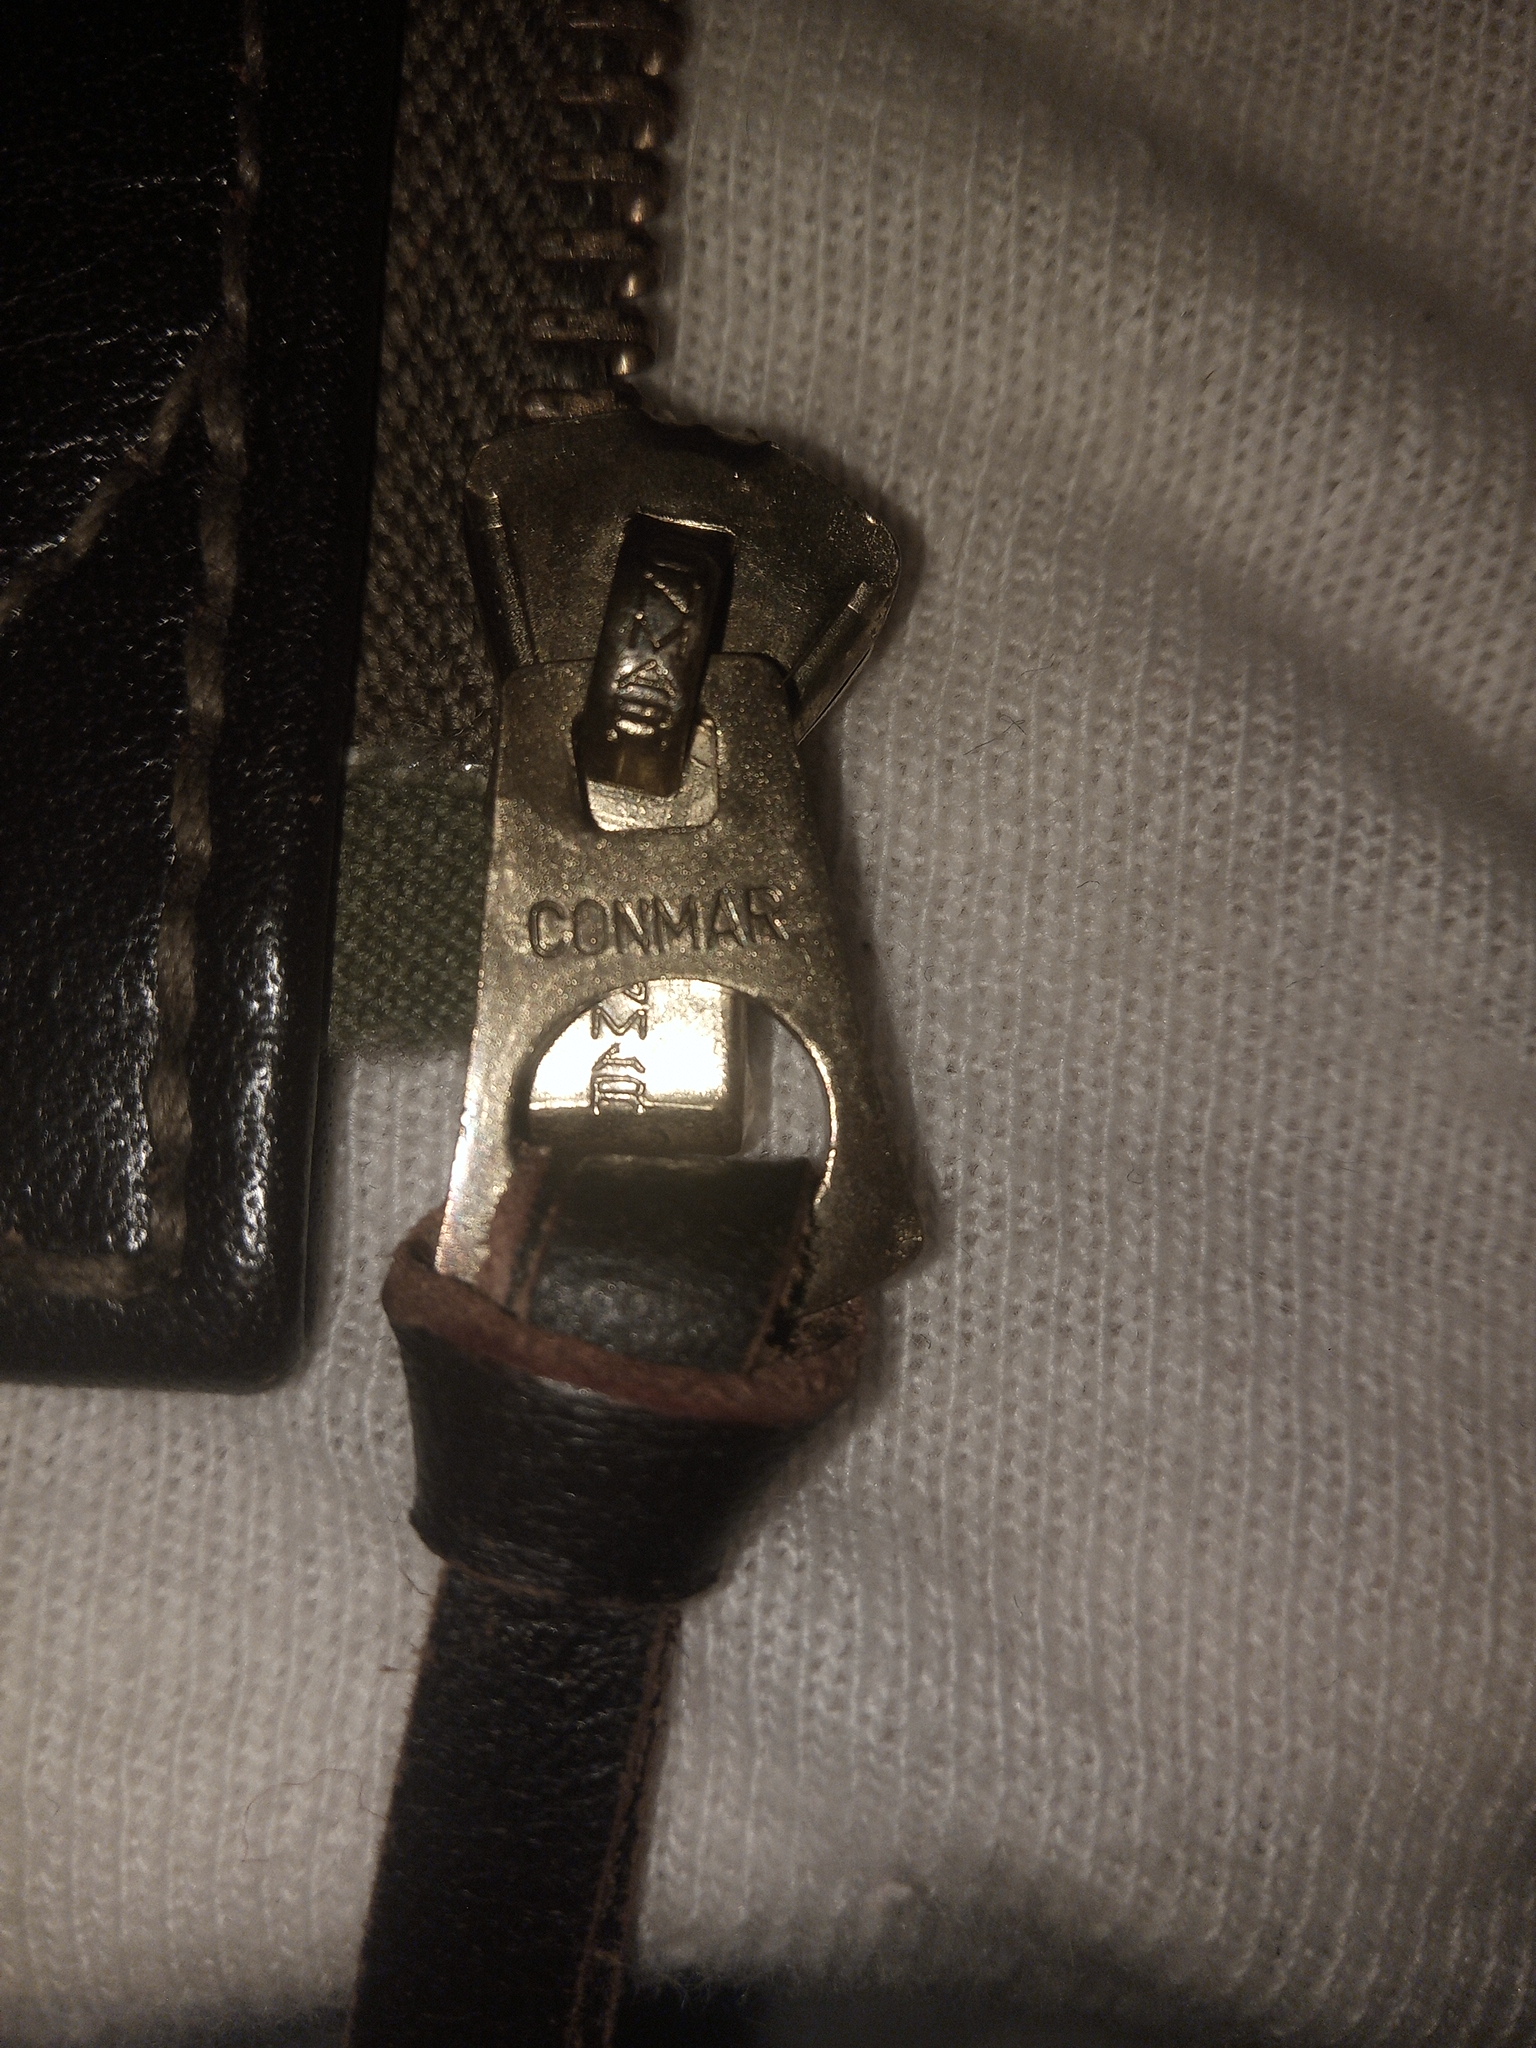 Conmar zipper | Vintage Leather Jackets Forum